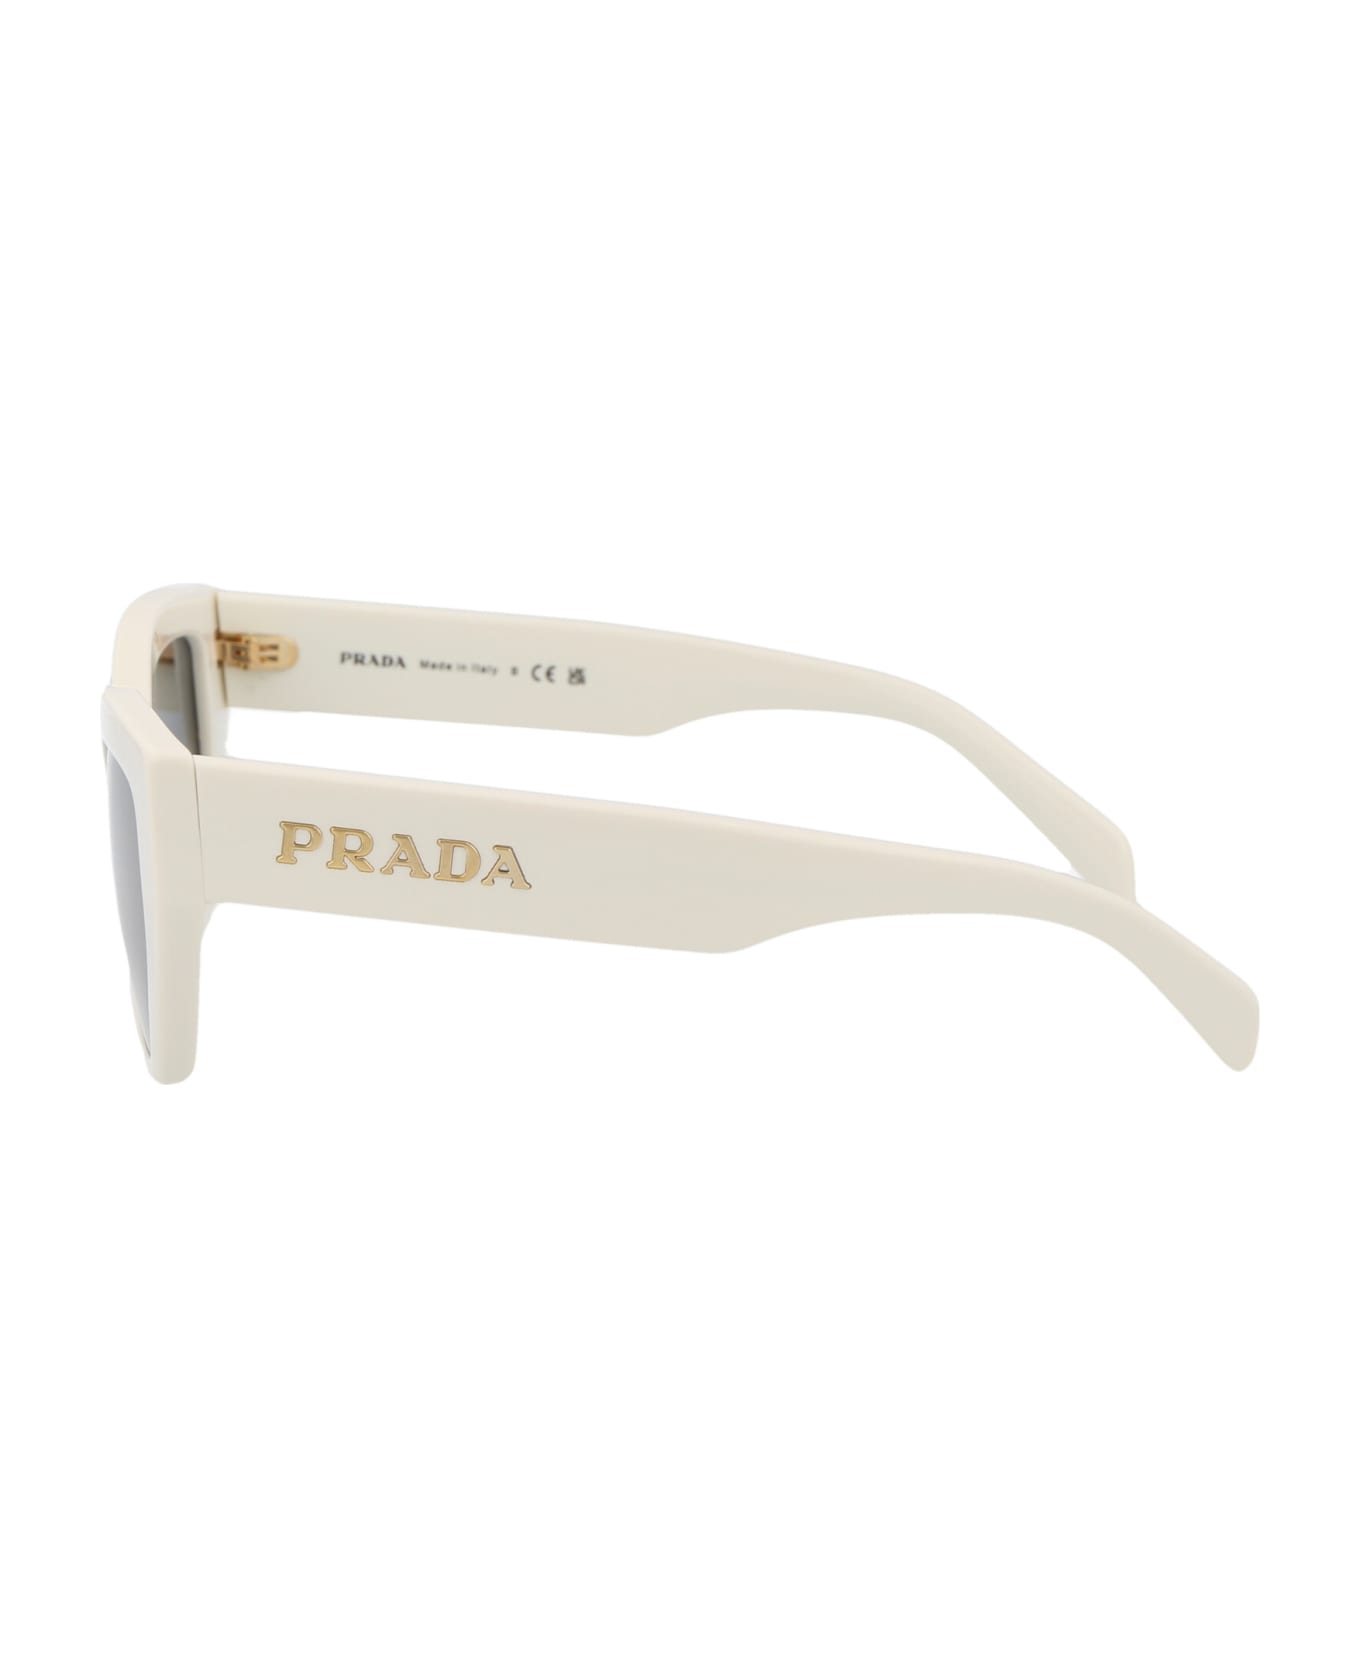 Prada Eyewear 0pr A09s Sunglasses - 1425S0 TALC